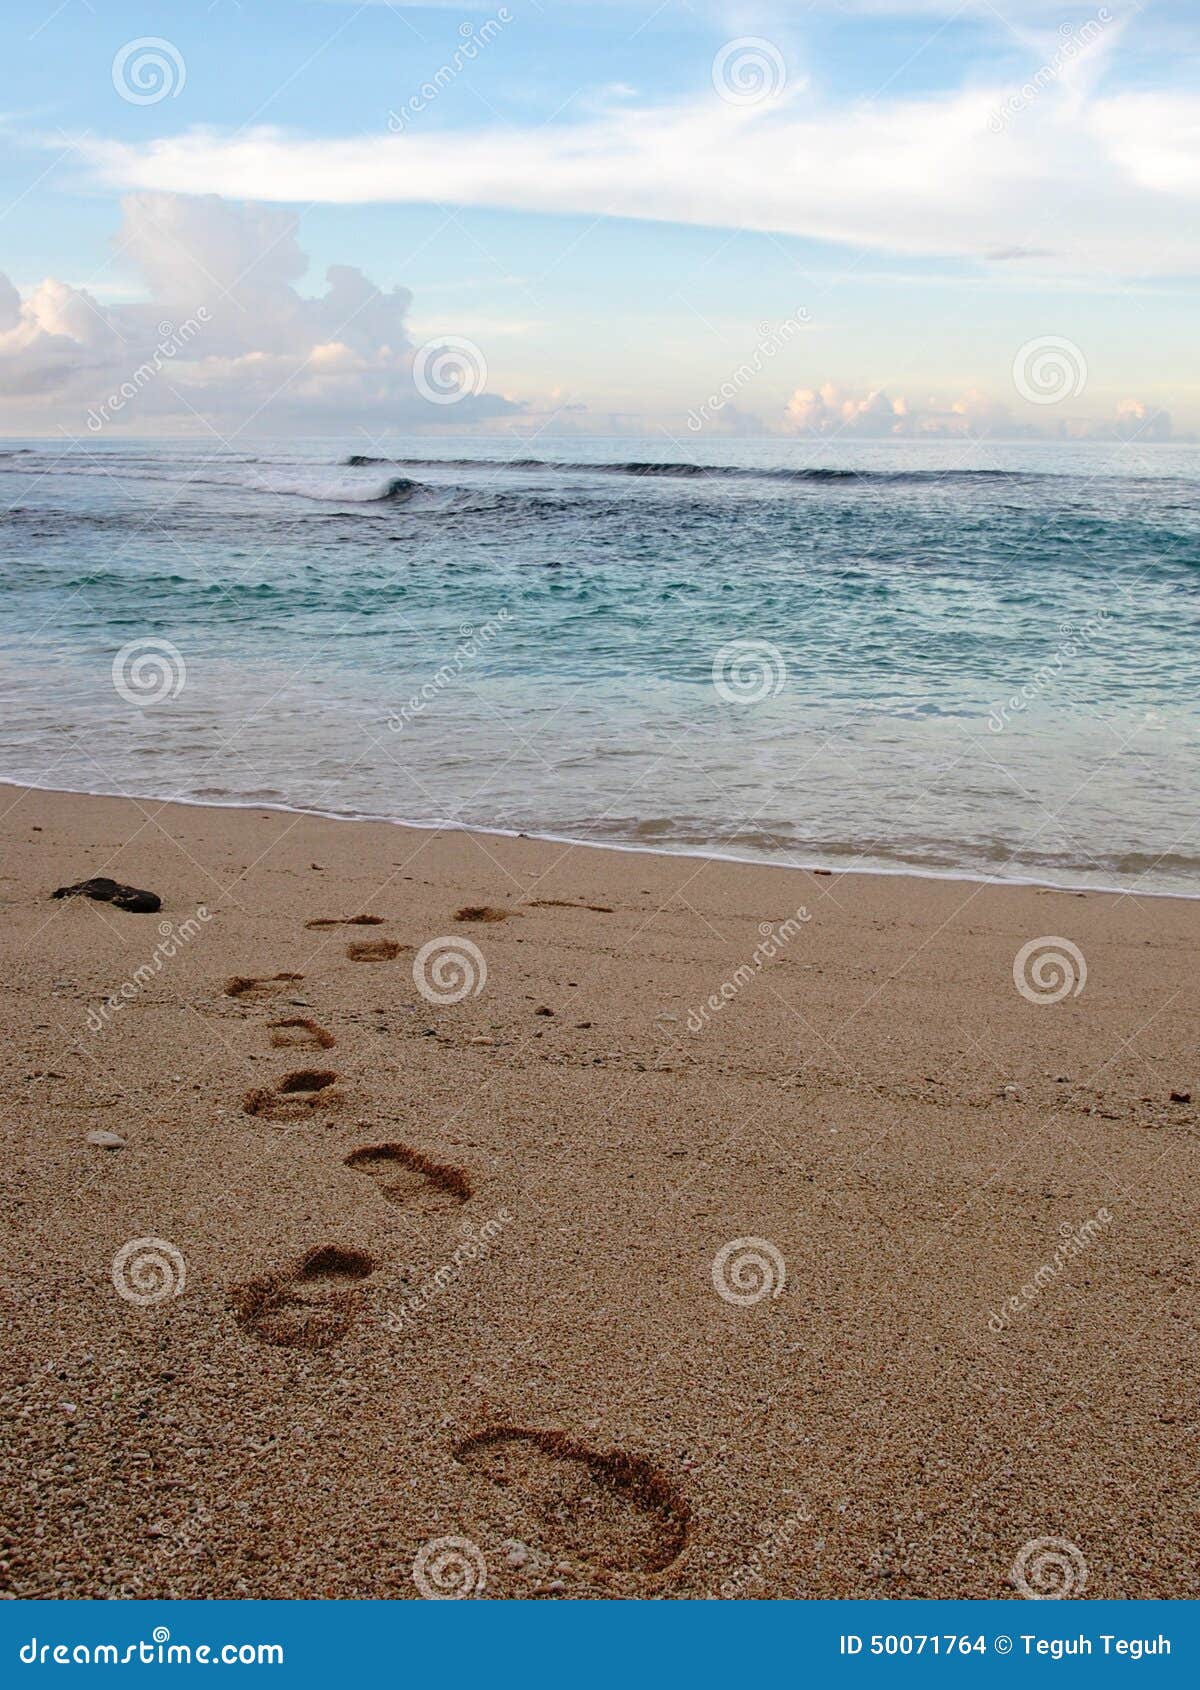 Foot step on sand at bakaro beach, manokwari, west papua.